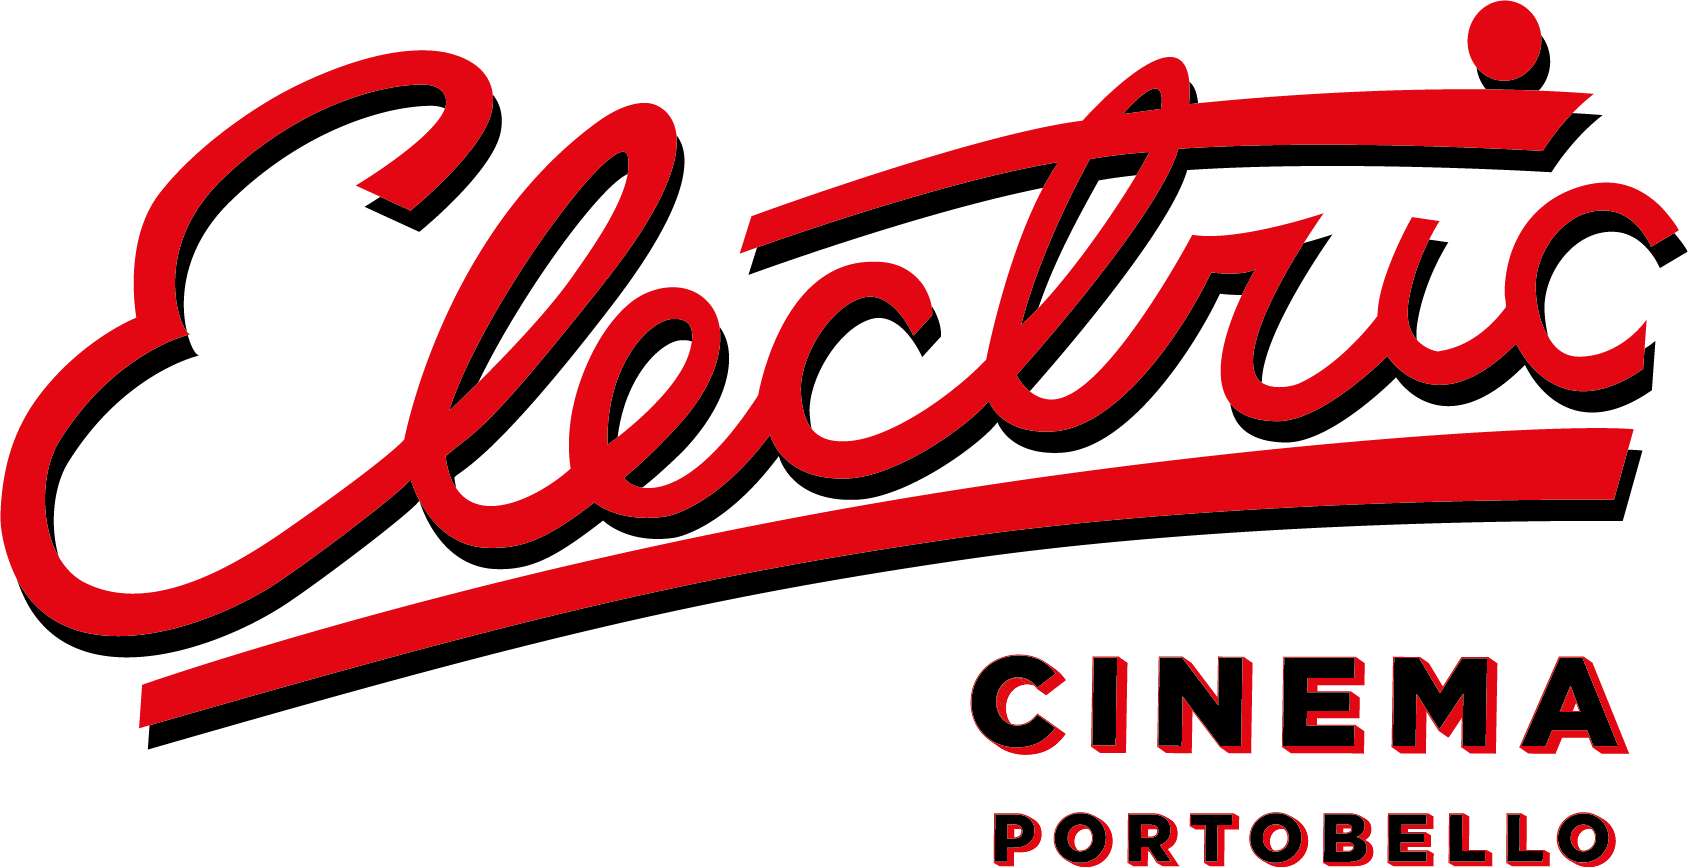 Electric_logo_portobello.png